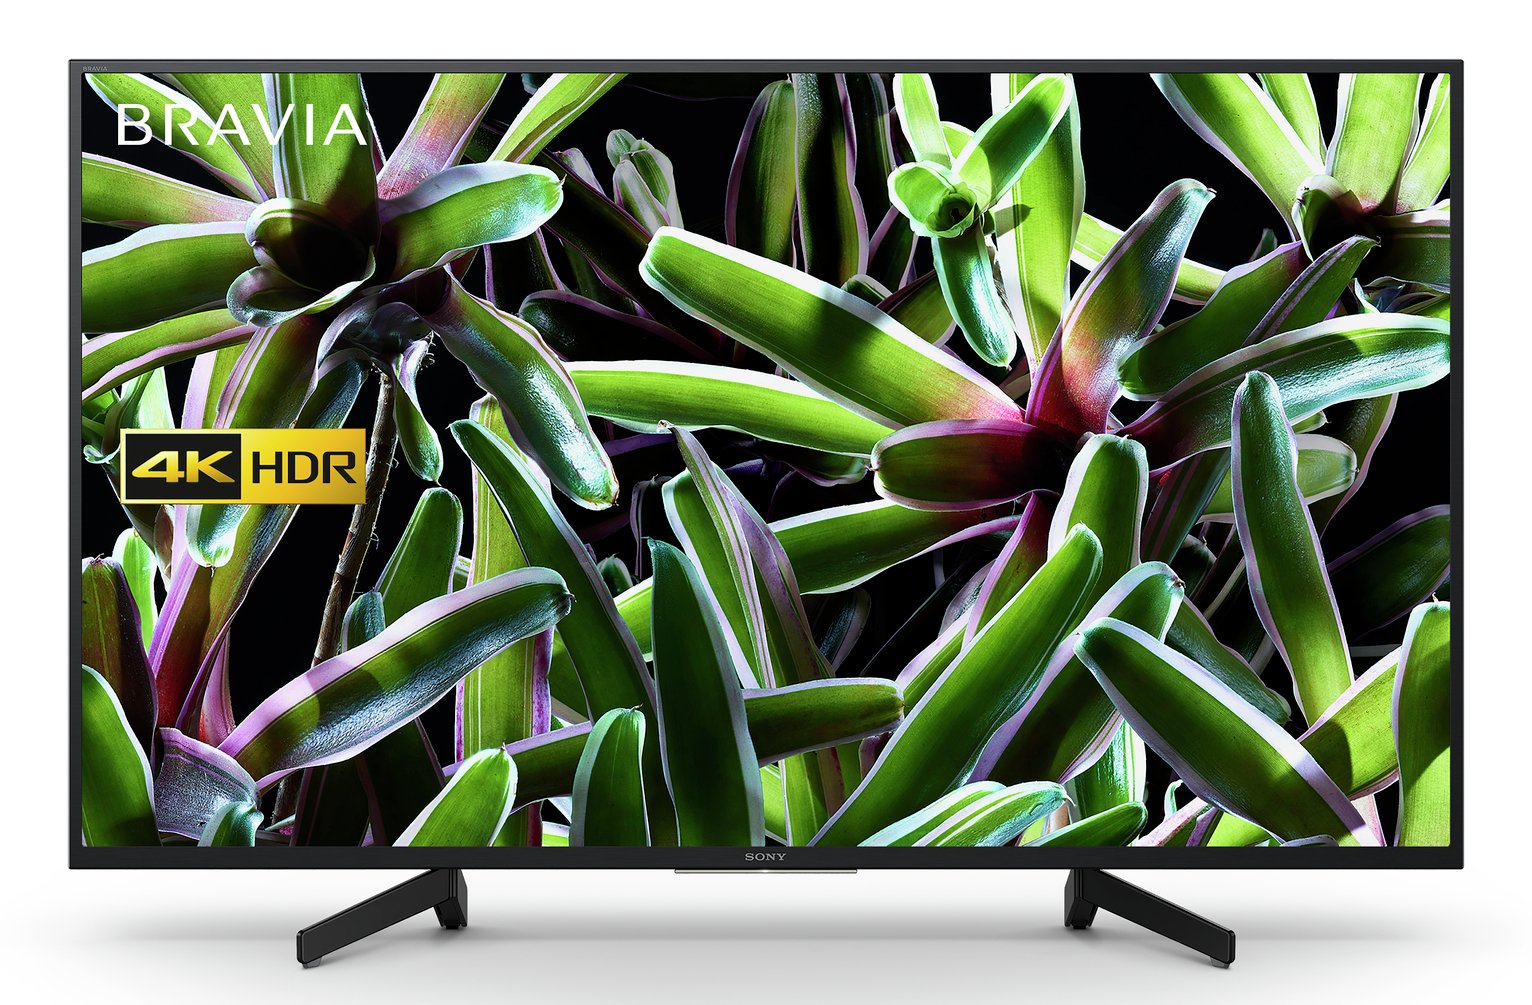 Sony 65 Inch KD65XG7003BU Smart 4K HDR LED TV Review